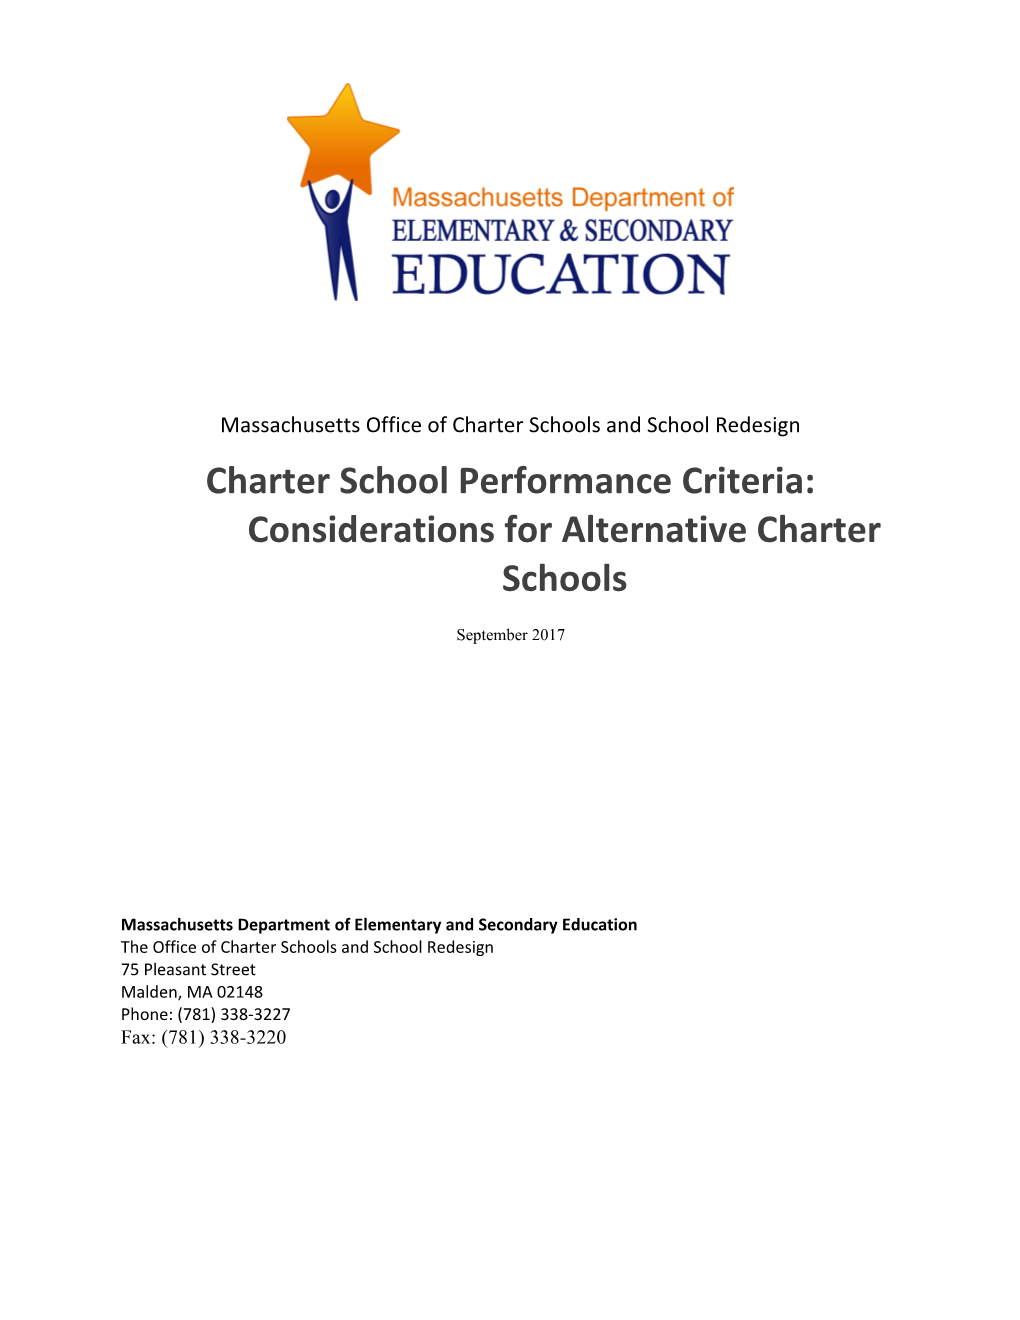 Charter School Performance Criteria: Considerations for Alternative Charter Schools